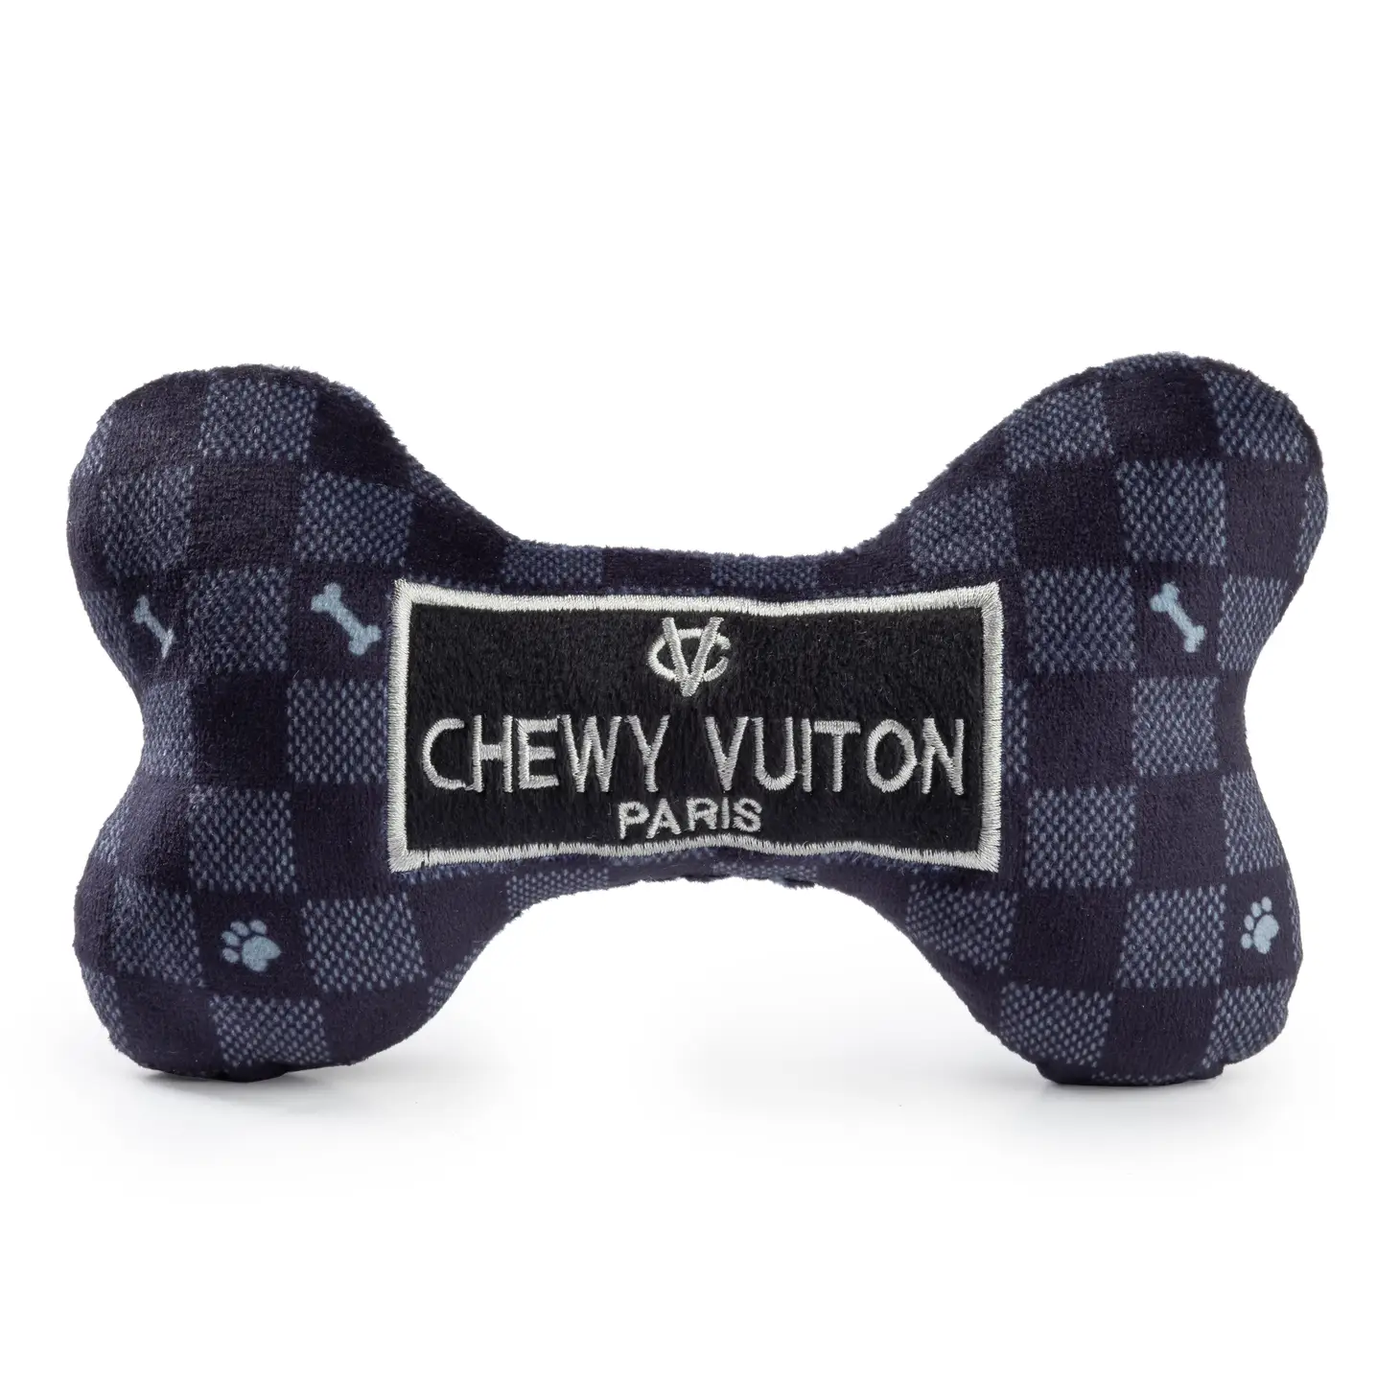 Black Chewy Vuiton Checker Bone